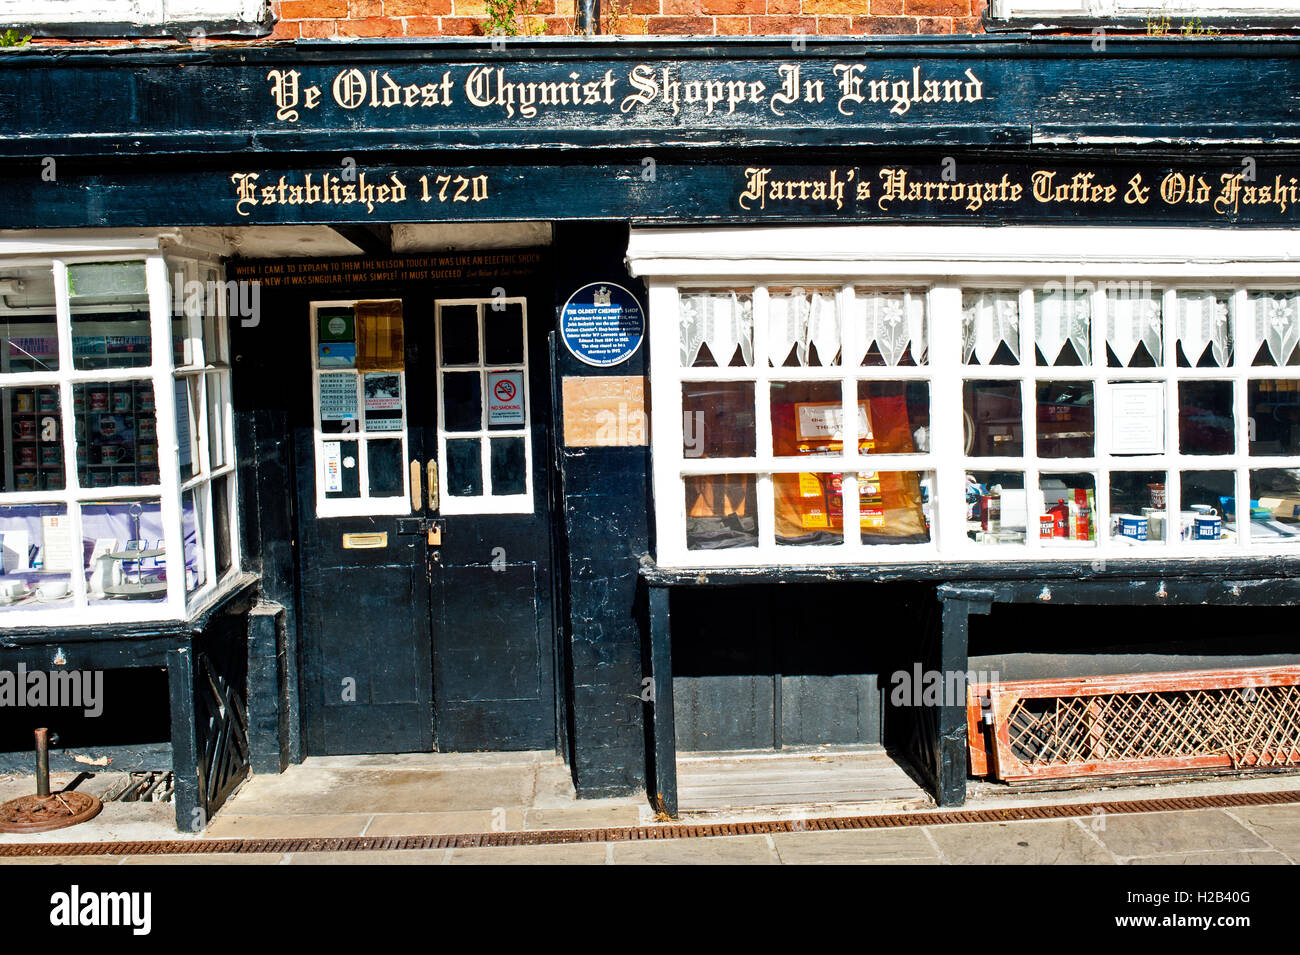 Ye Oldest Chemist Shop in England, Knaresborough Stock Photo